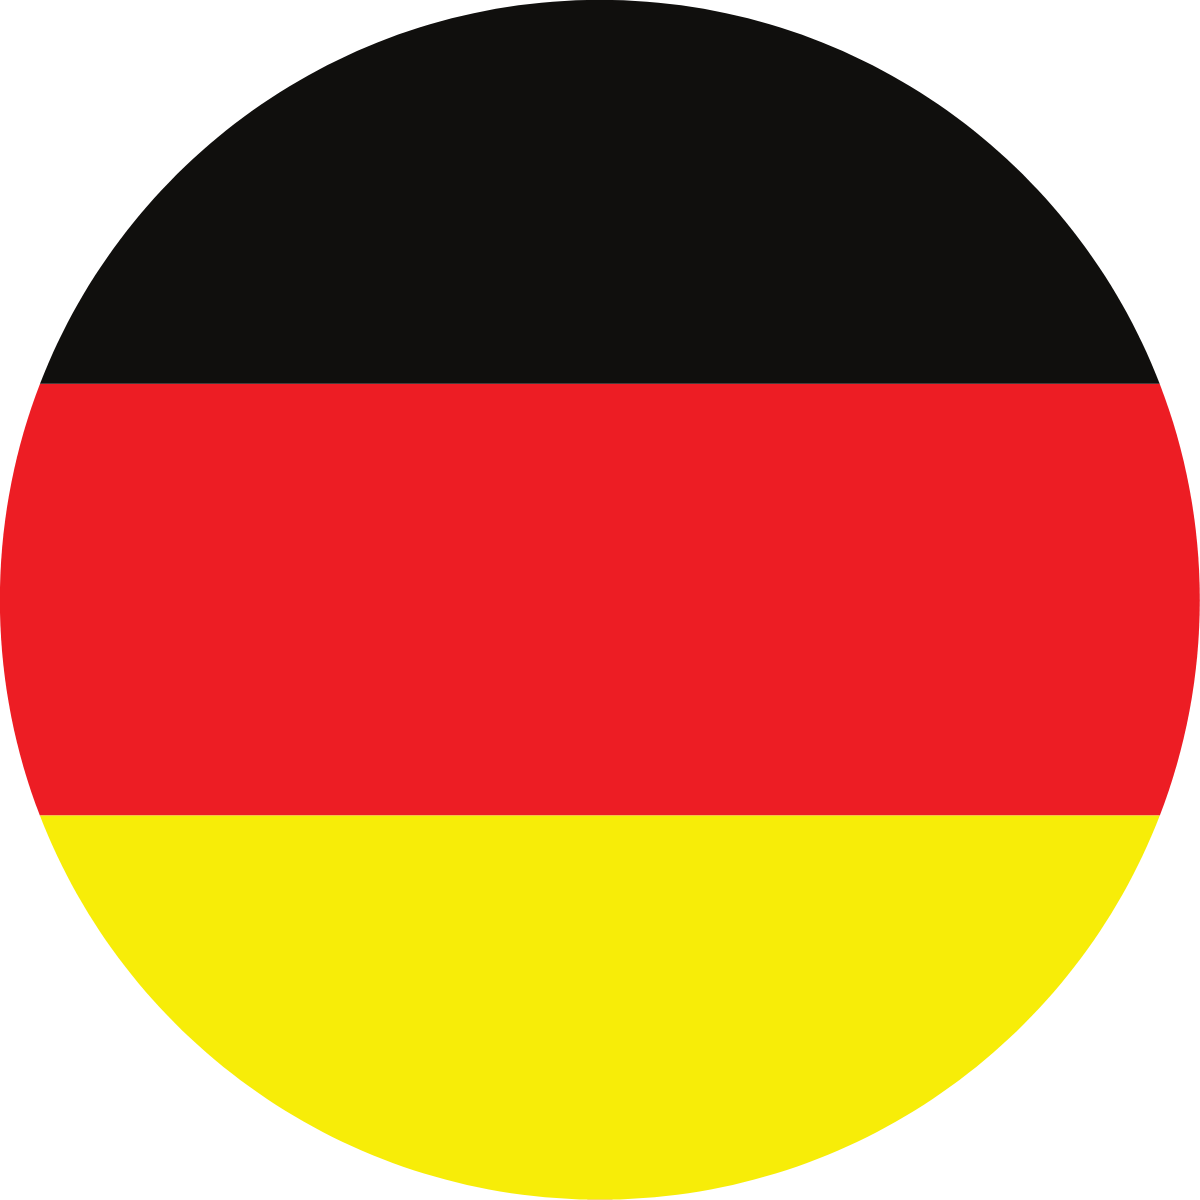 tysk, tyskland